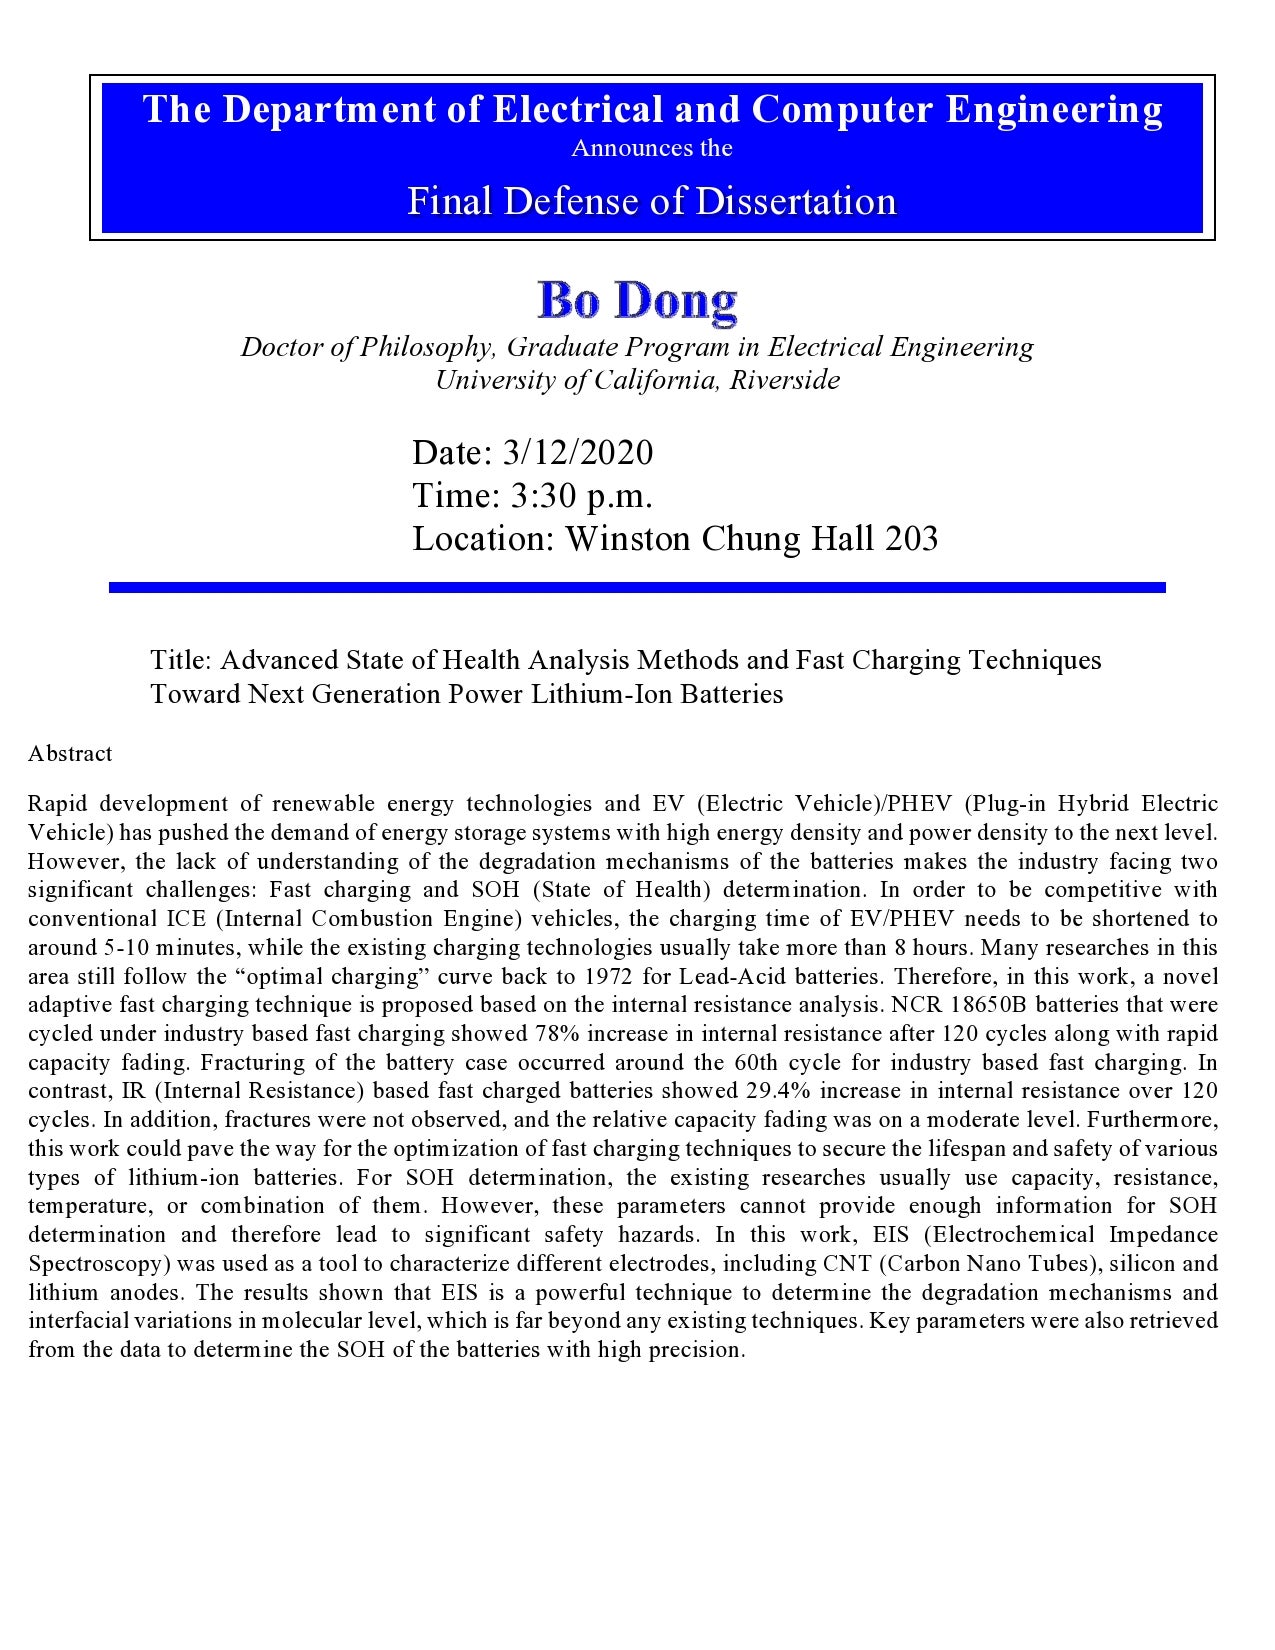 DONG, Bo PhD Dissertation Defense Flyer